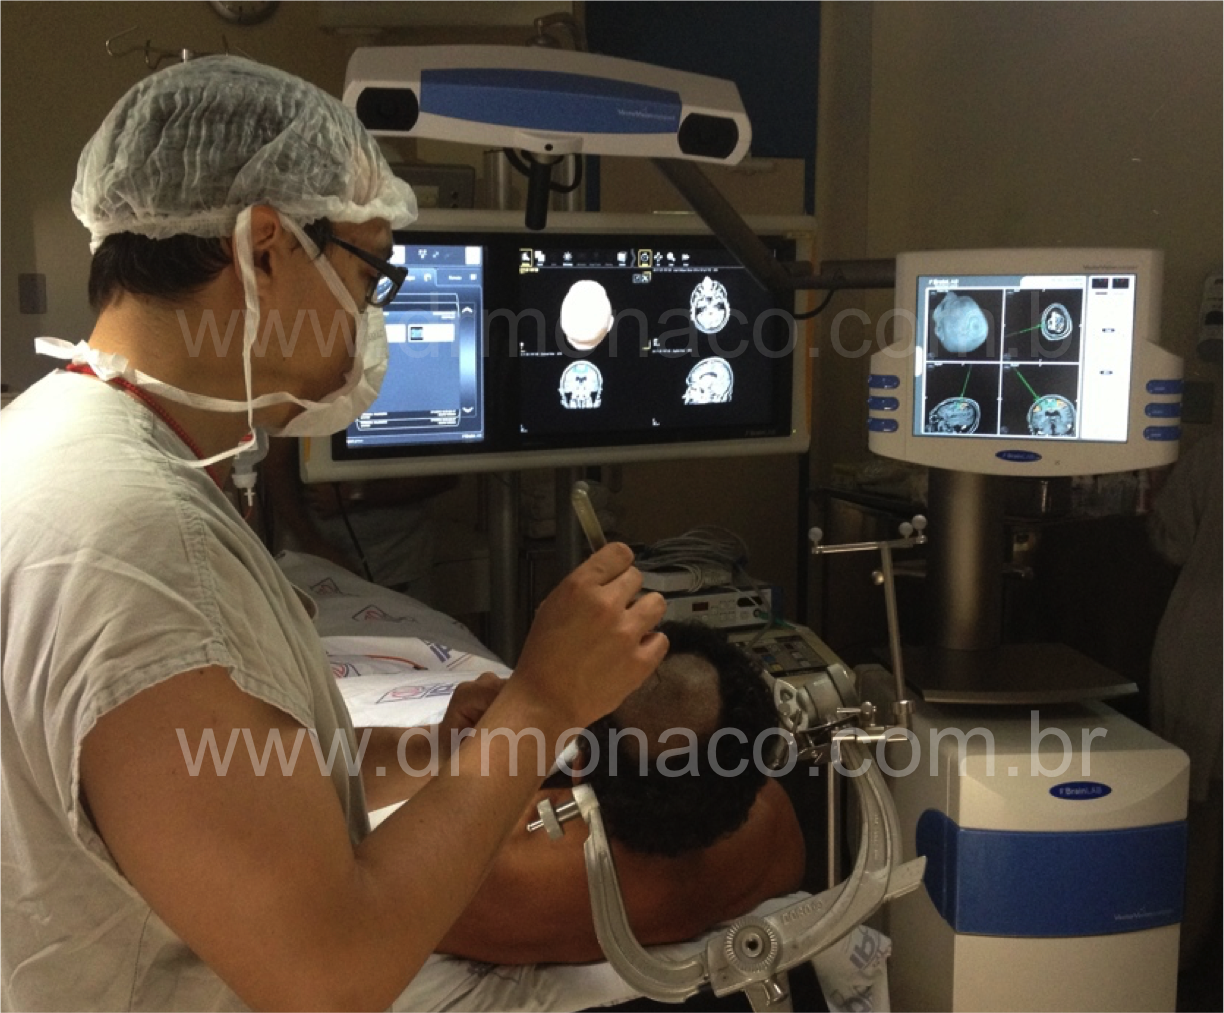 Estimulacao Cortica; Motor Cortex Stimulation; Dr Bernardo de Monaco; Pain Treatment; Tratamento de Dor; Neurocirurgia Funcional; Functional Neurosurgery